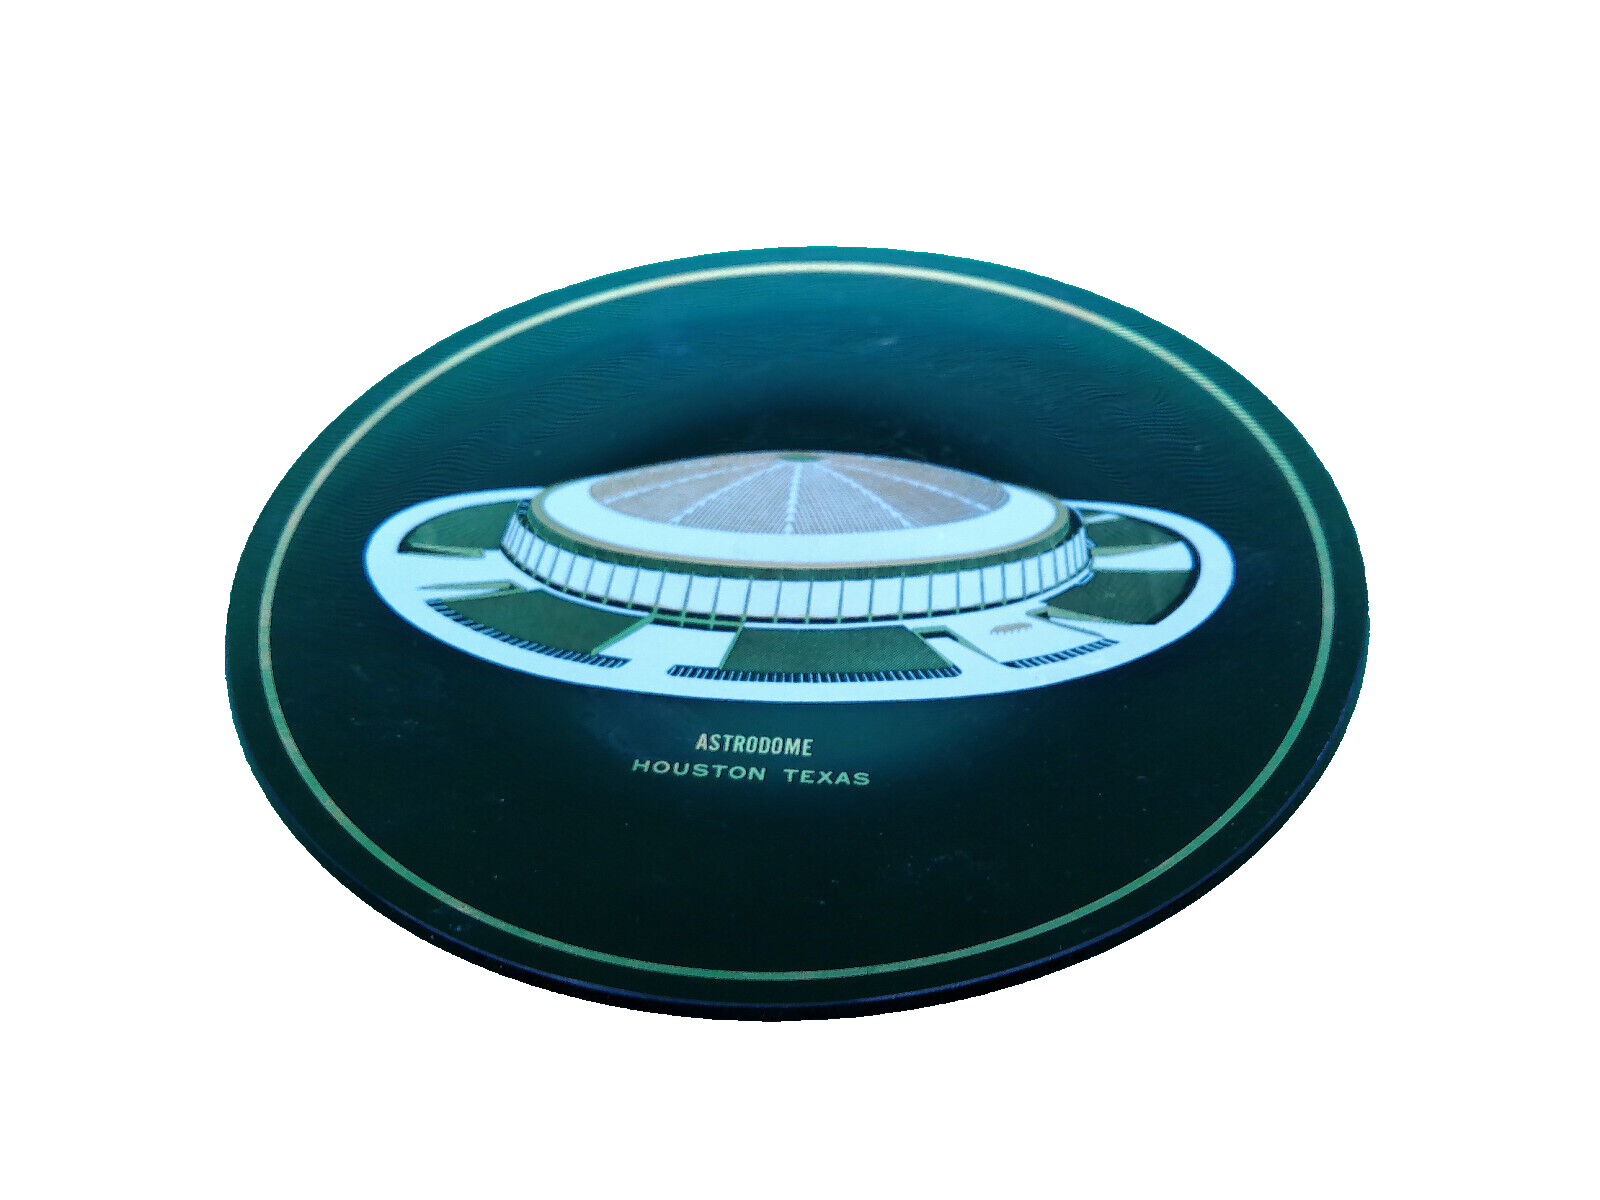 Astrodome Houston TX vintage smoked glass plate black